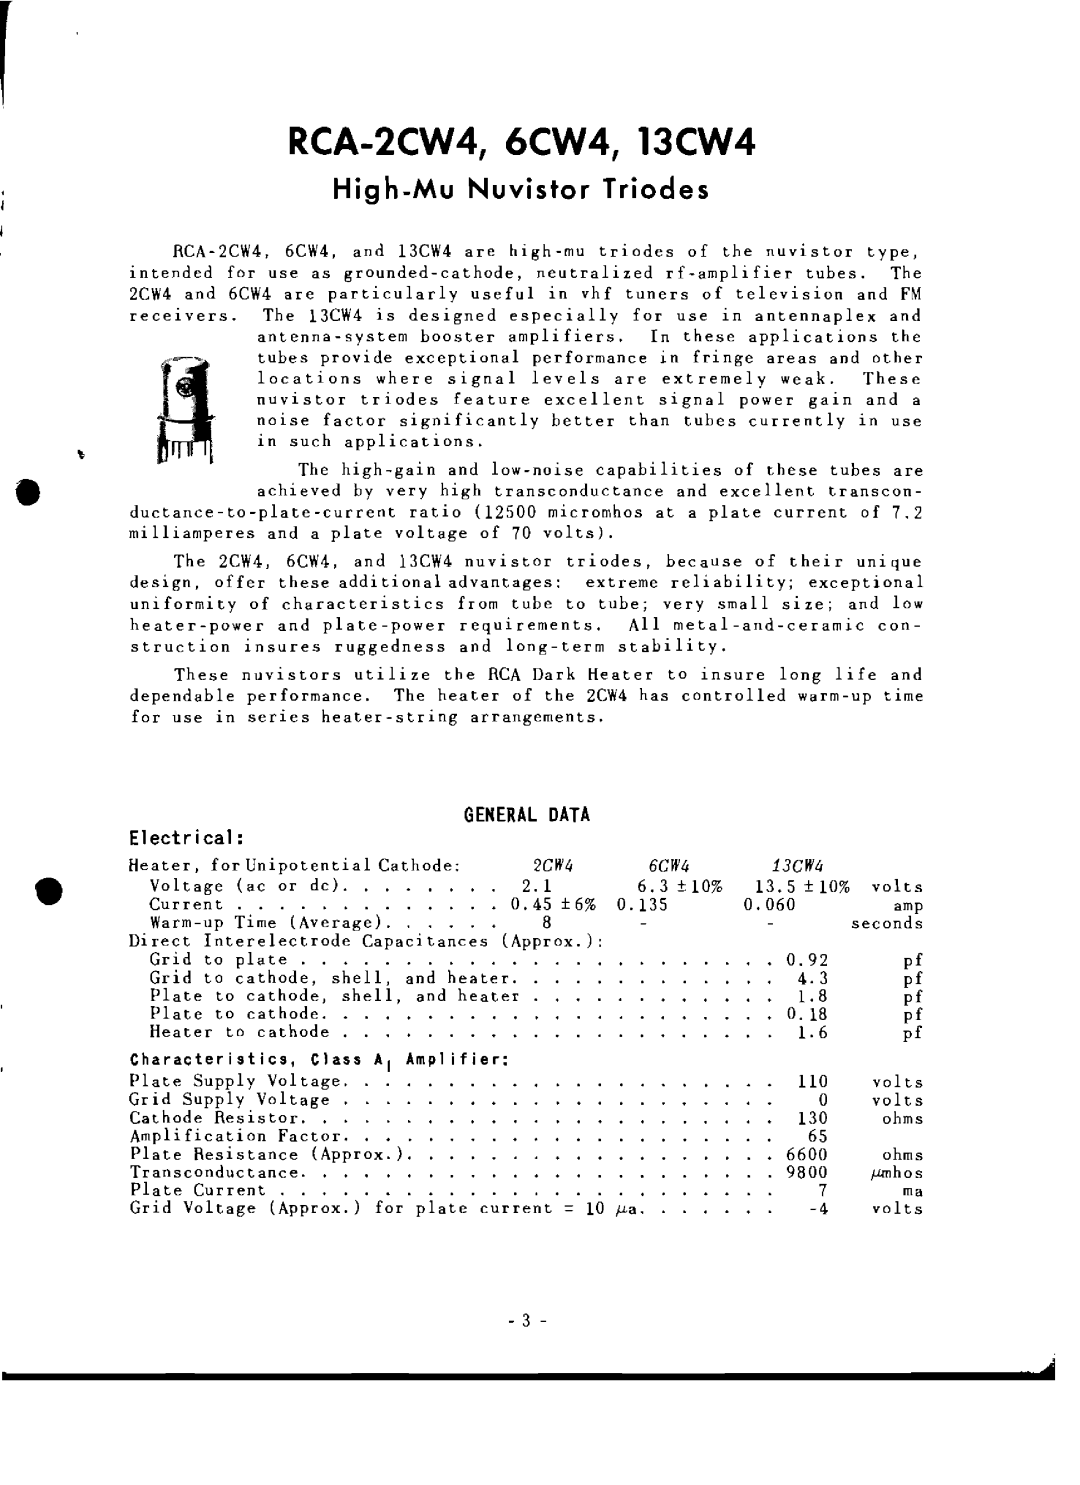 RCA manual RCA-2CW4, 6CW4, 13CW4, High-Mu Nuvistor Triodes, General Data 